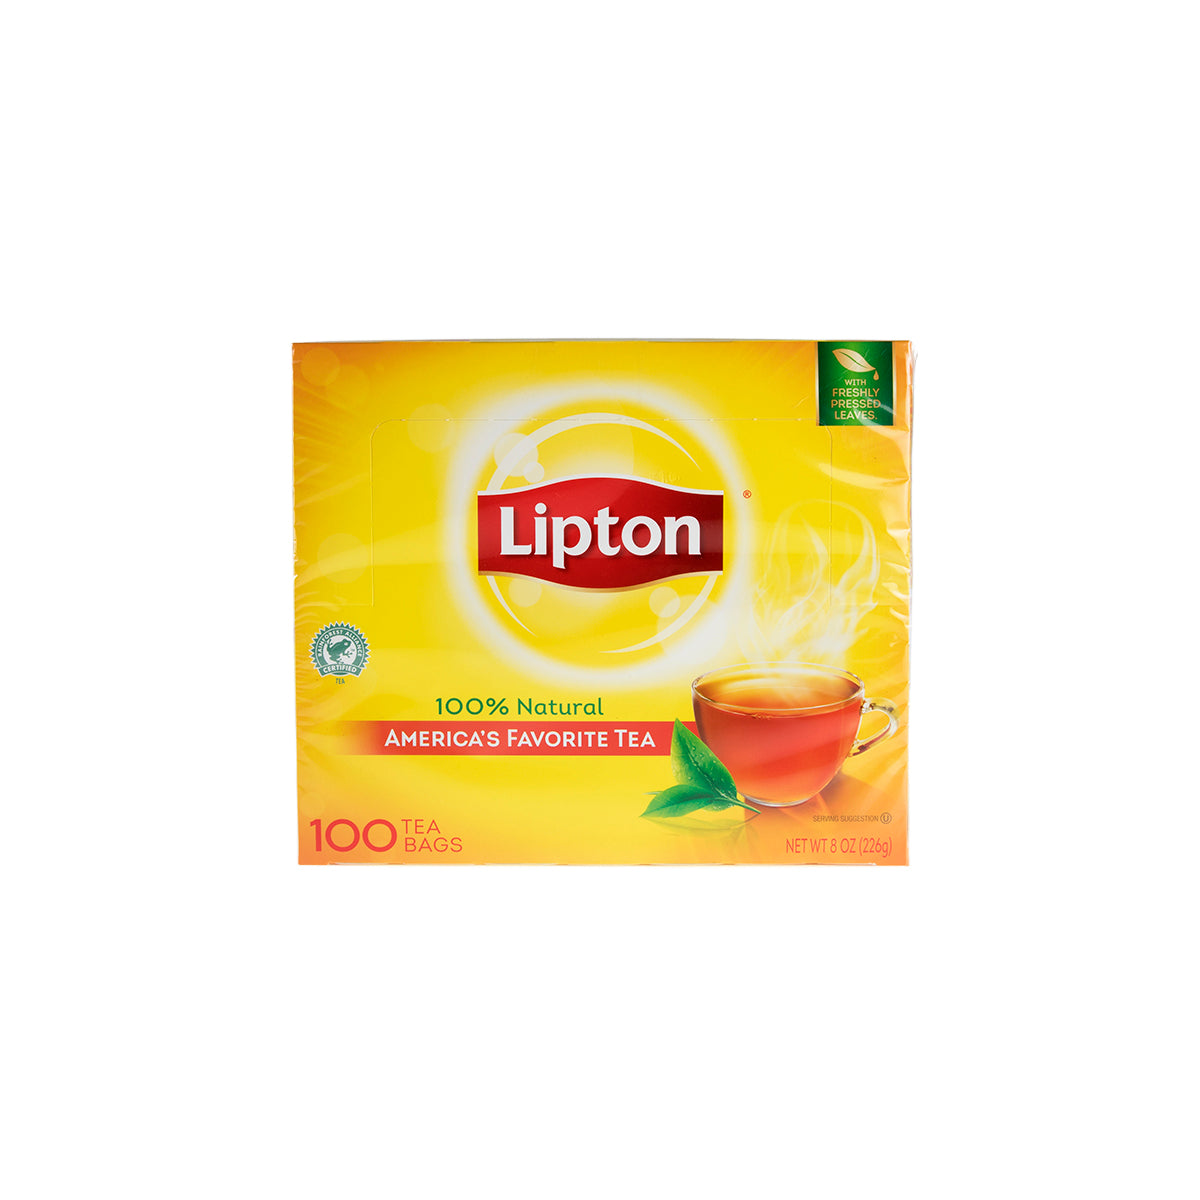 Lipton Tea Bags 100 CT